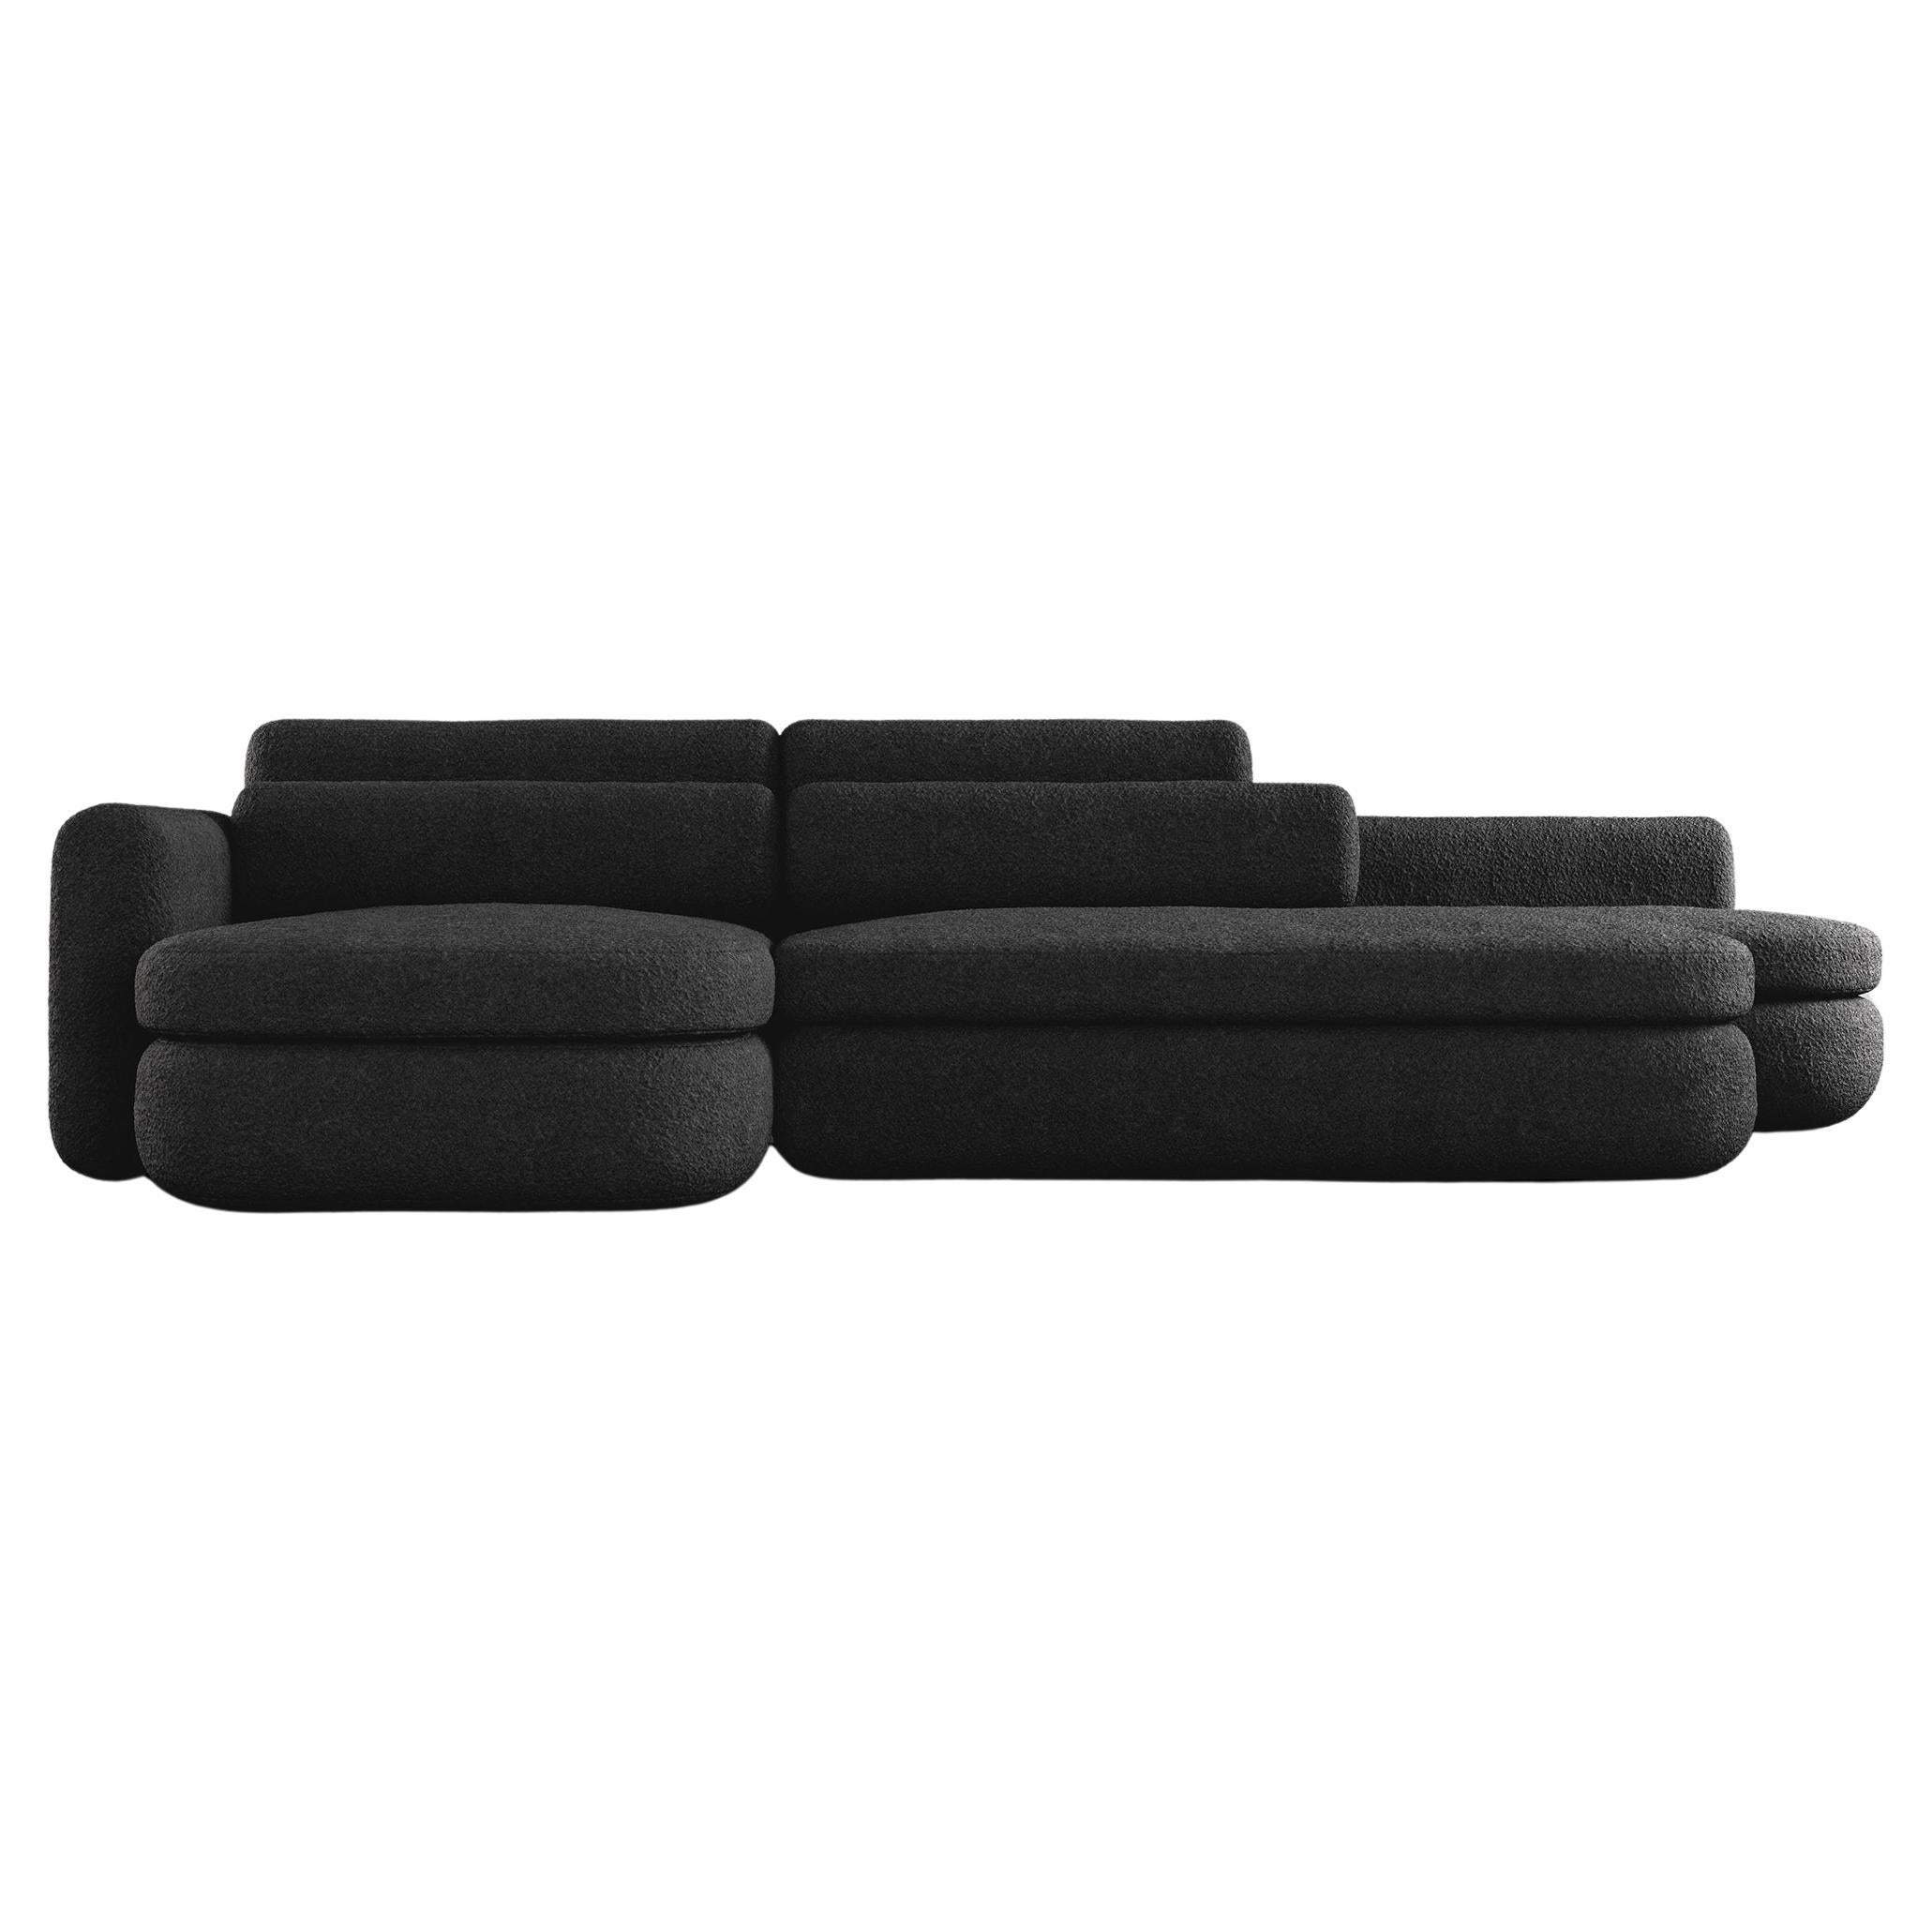 ASYM SECTIONAL – Modernes asymmetrisches Sofa aus schwarzem Bouclé